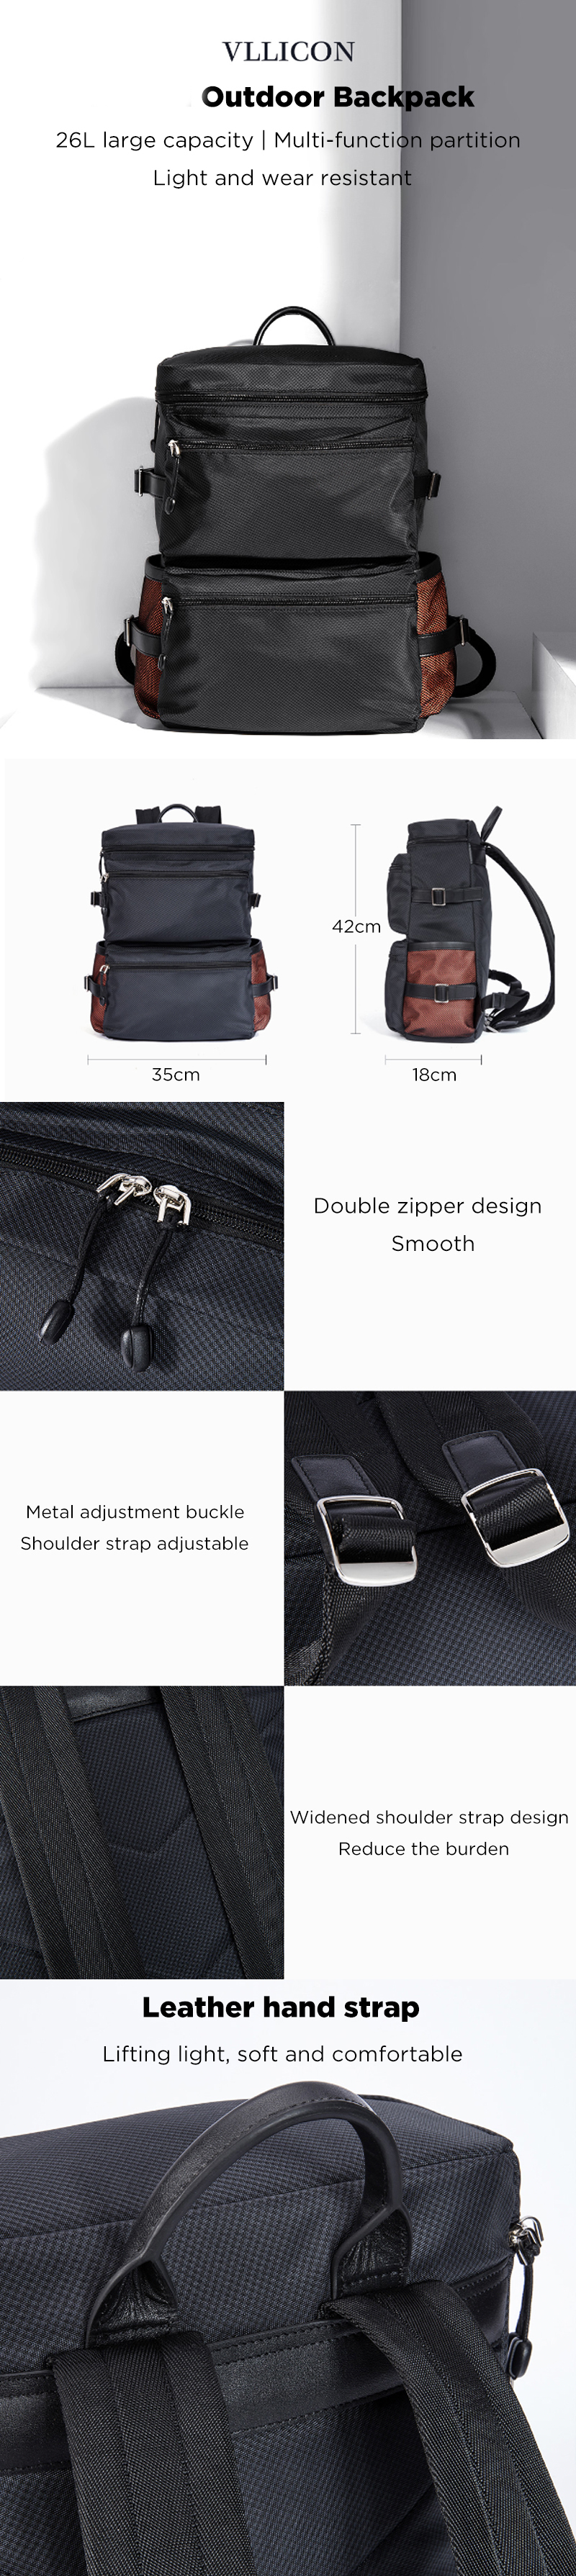 VLLICON-26L-Backpack-15inch-Laptop-Waterproof-Shoulder-Bag-Outdoor-Business-Travel-Rucksack-1493696-1